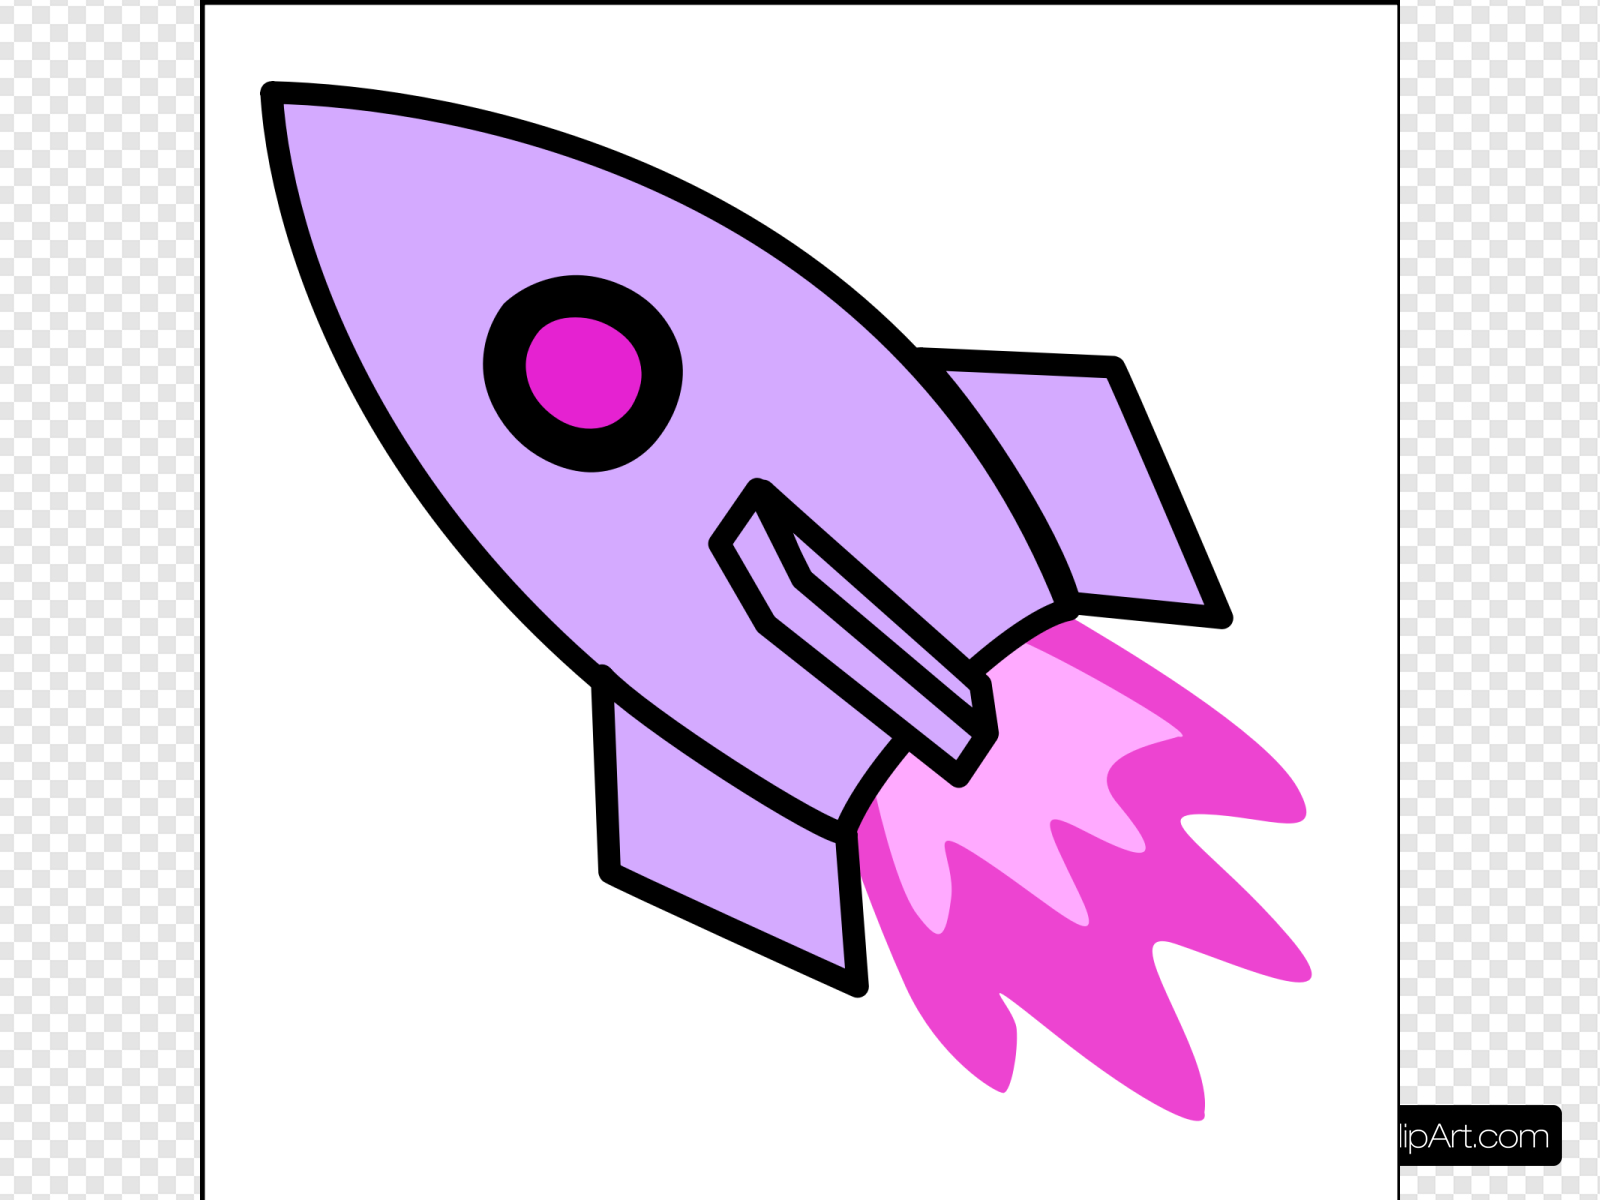 rocket clipart images pink